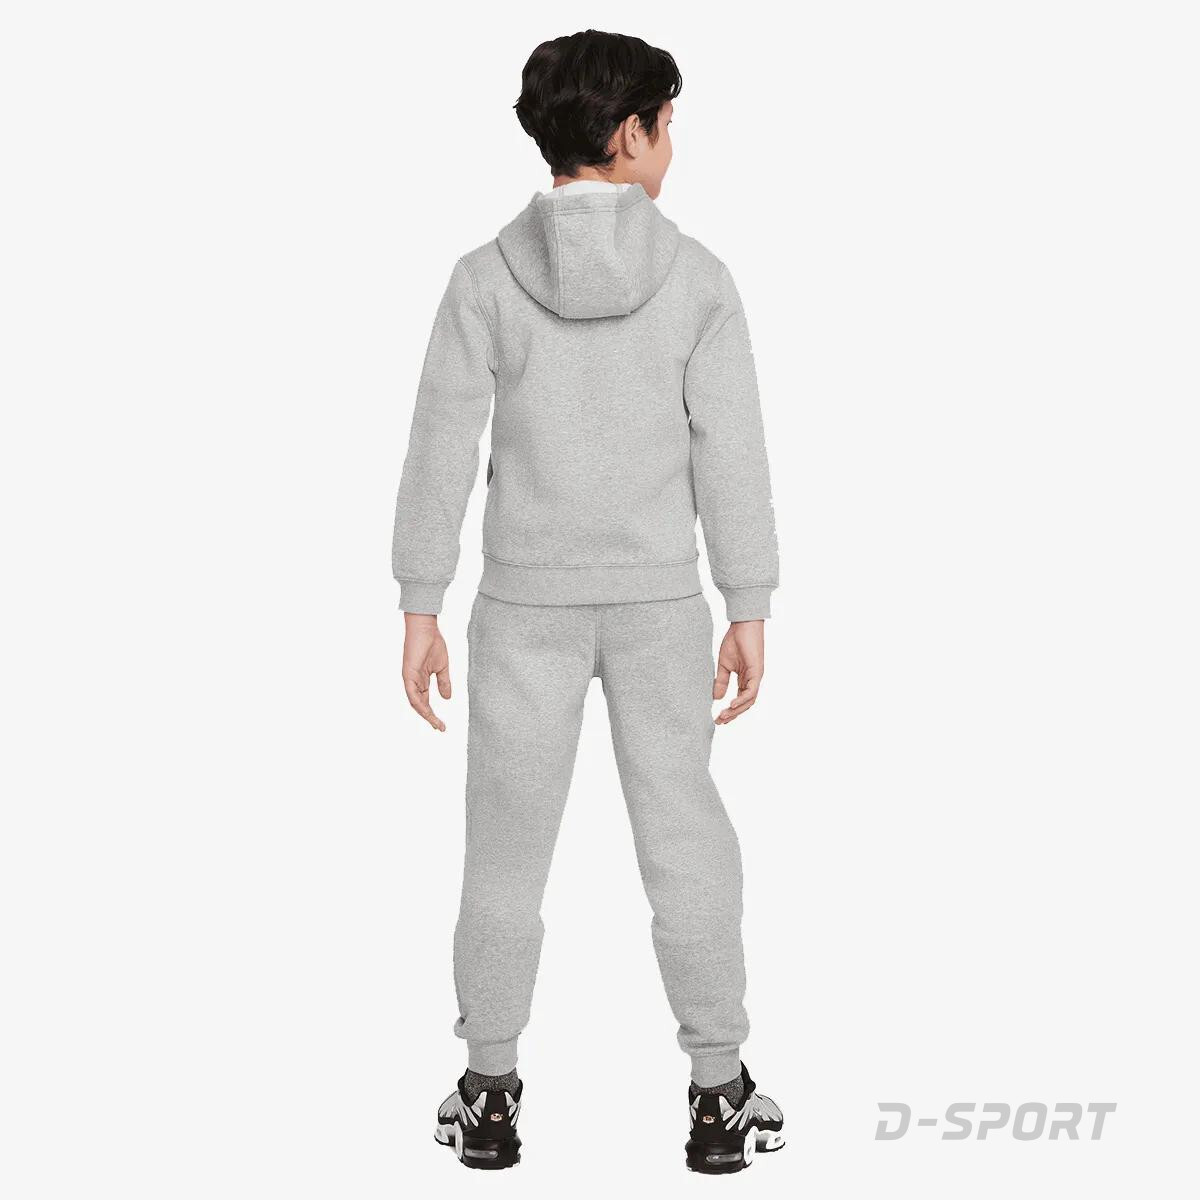 Nike Sportswear Club Fleece Bi